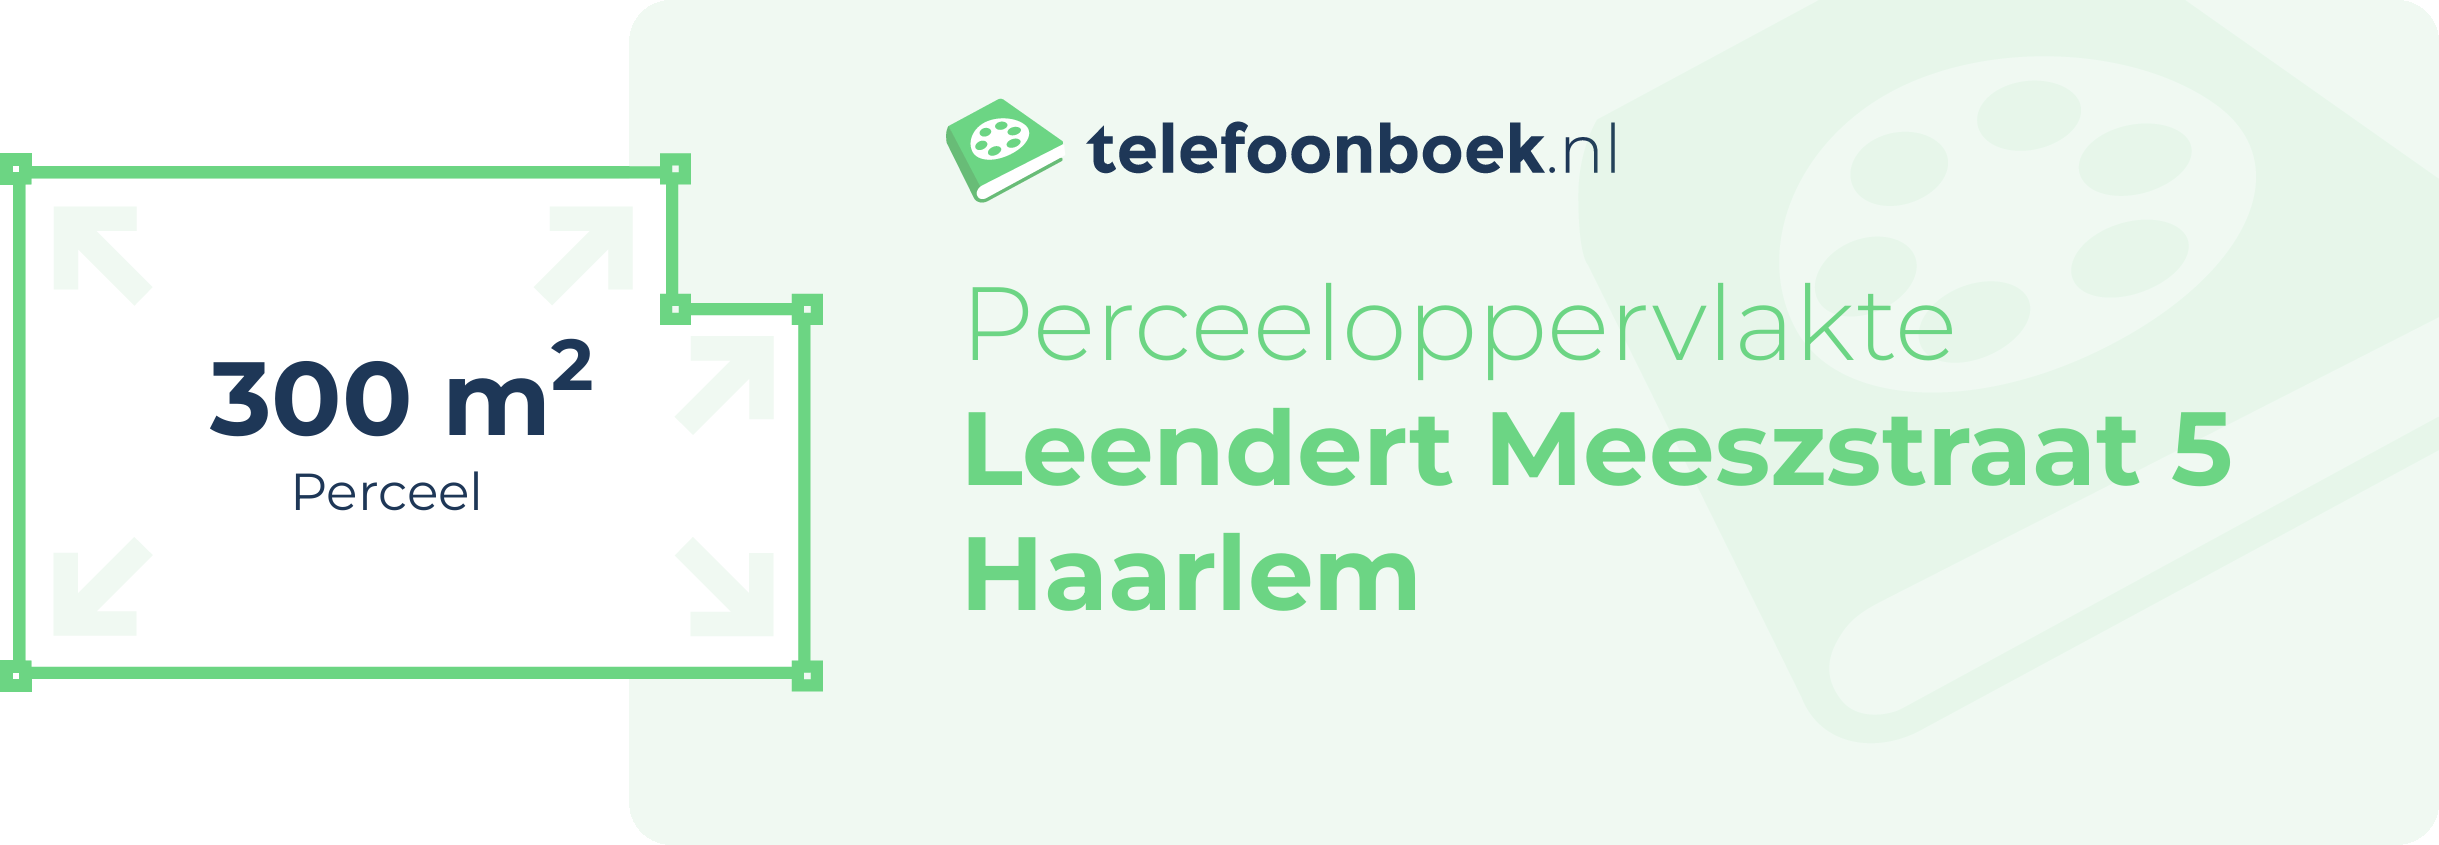 Perceeloppervlakte Leendert Meeszstraat 5 Haarlem